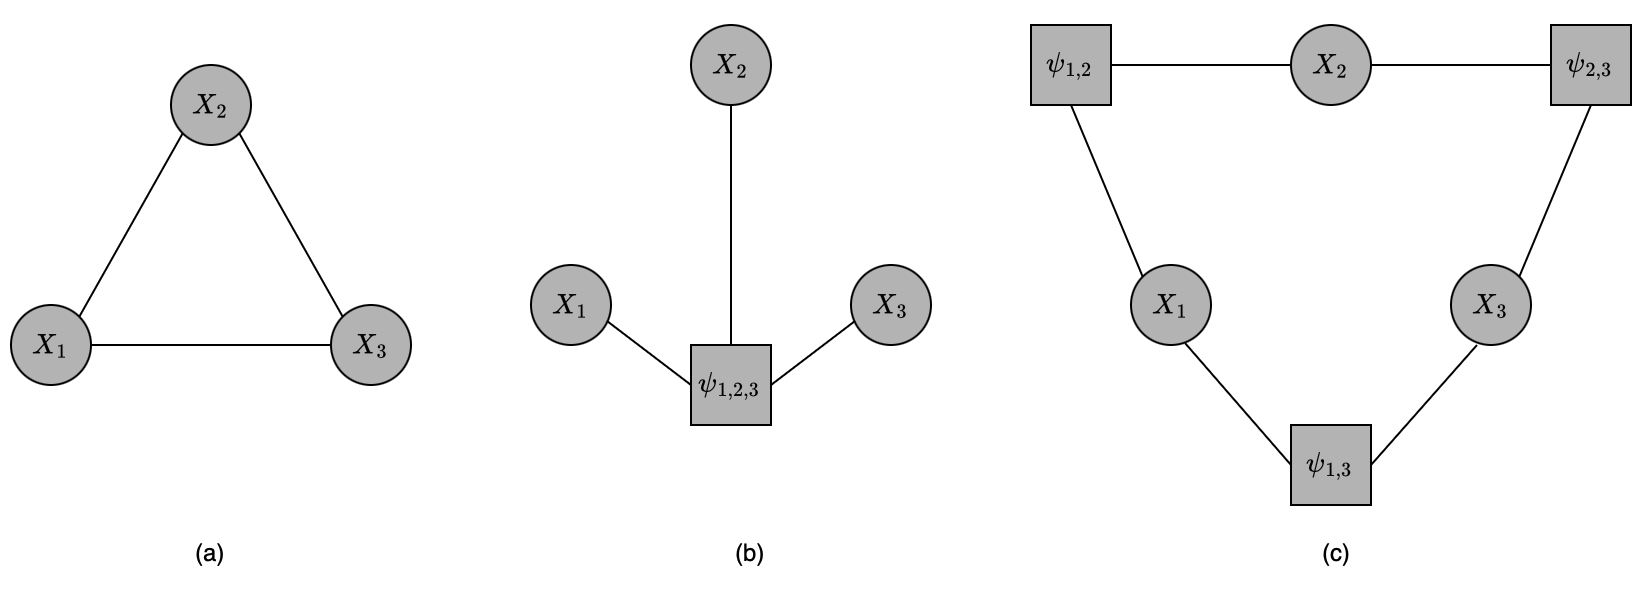 Same Markov network different factor graphs